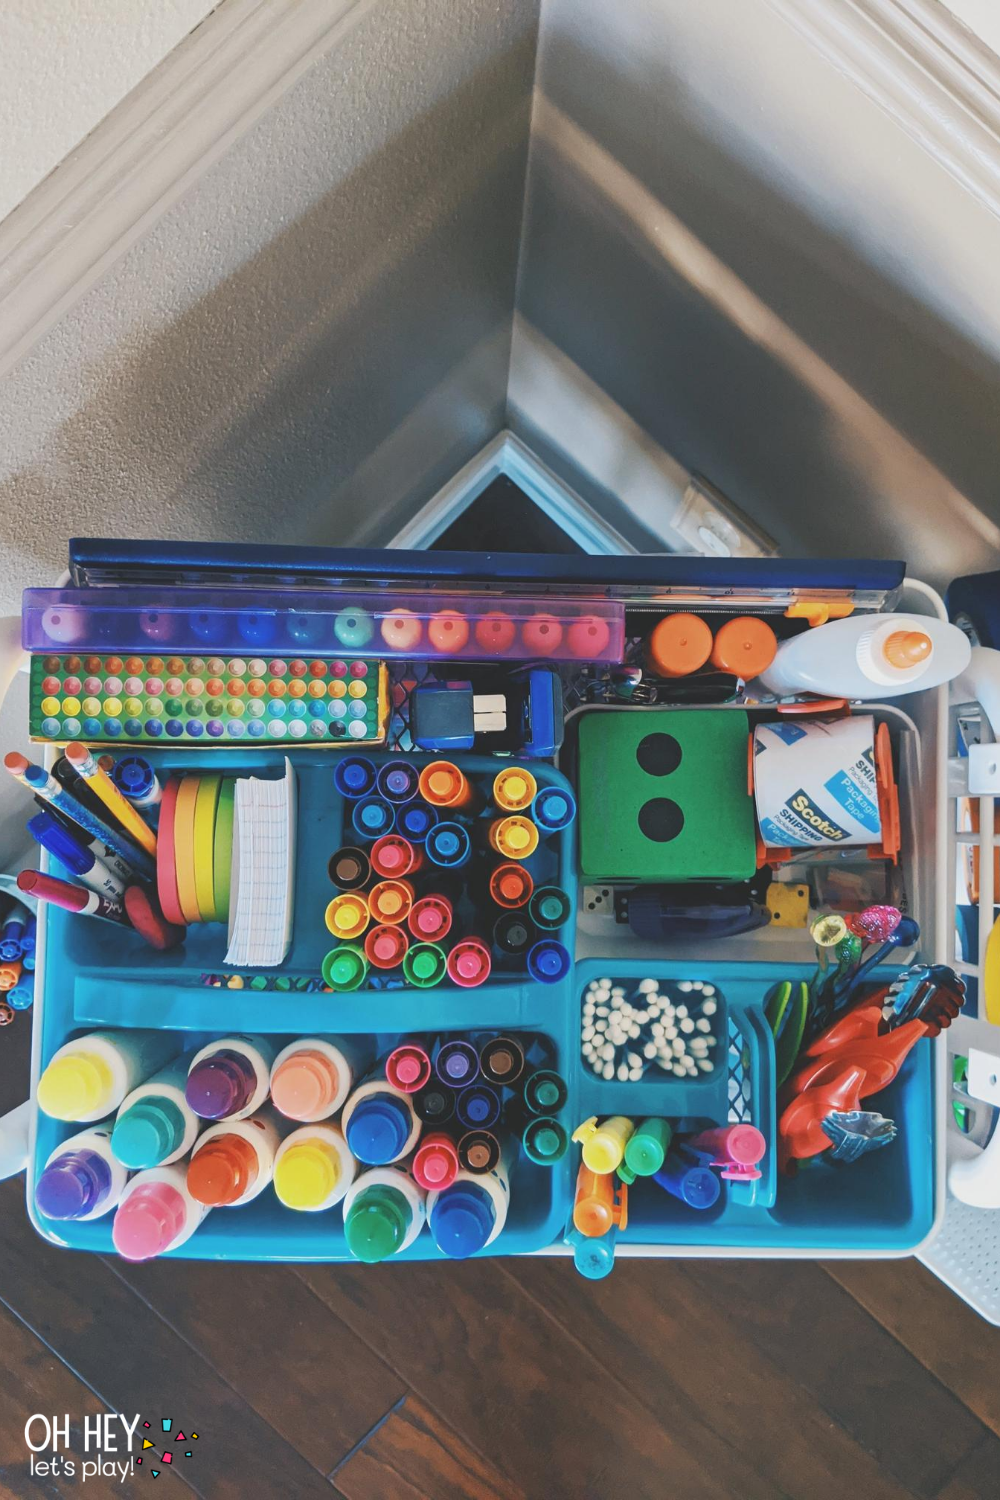 Organizing Kids Art Supplies + Activities — Organize Nashville